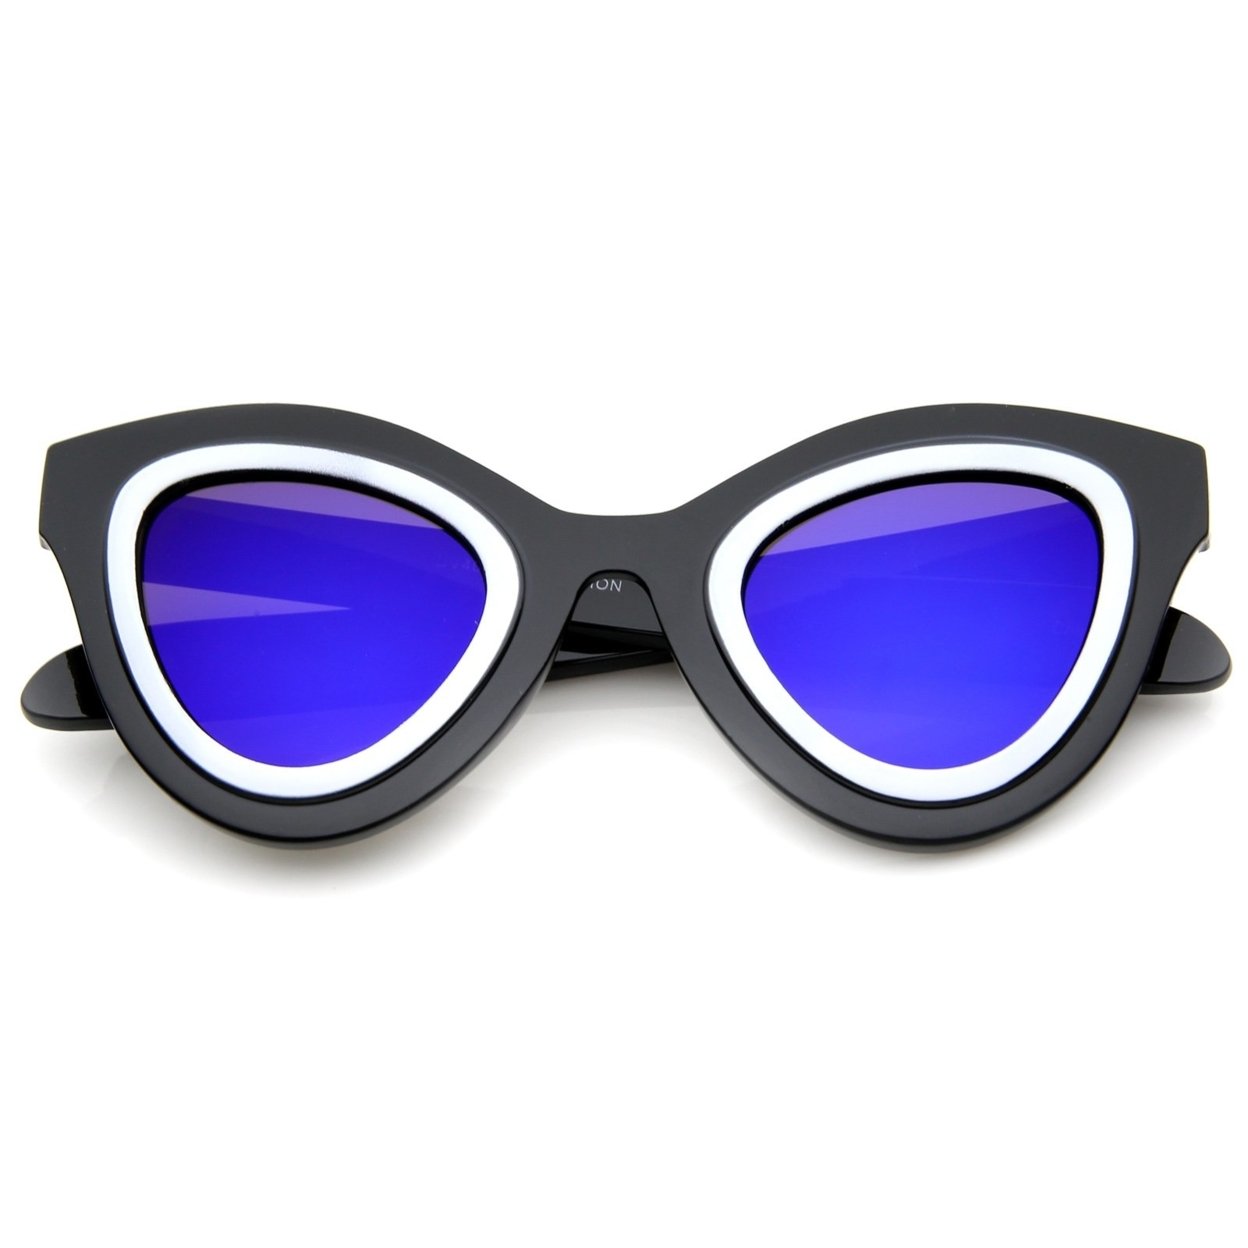 Womens High Fashion Two-Toned Mirrored Cat Eye Sunglasses 42mm - Shiny Black-White / Blue Mirror